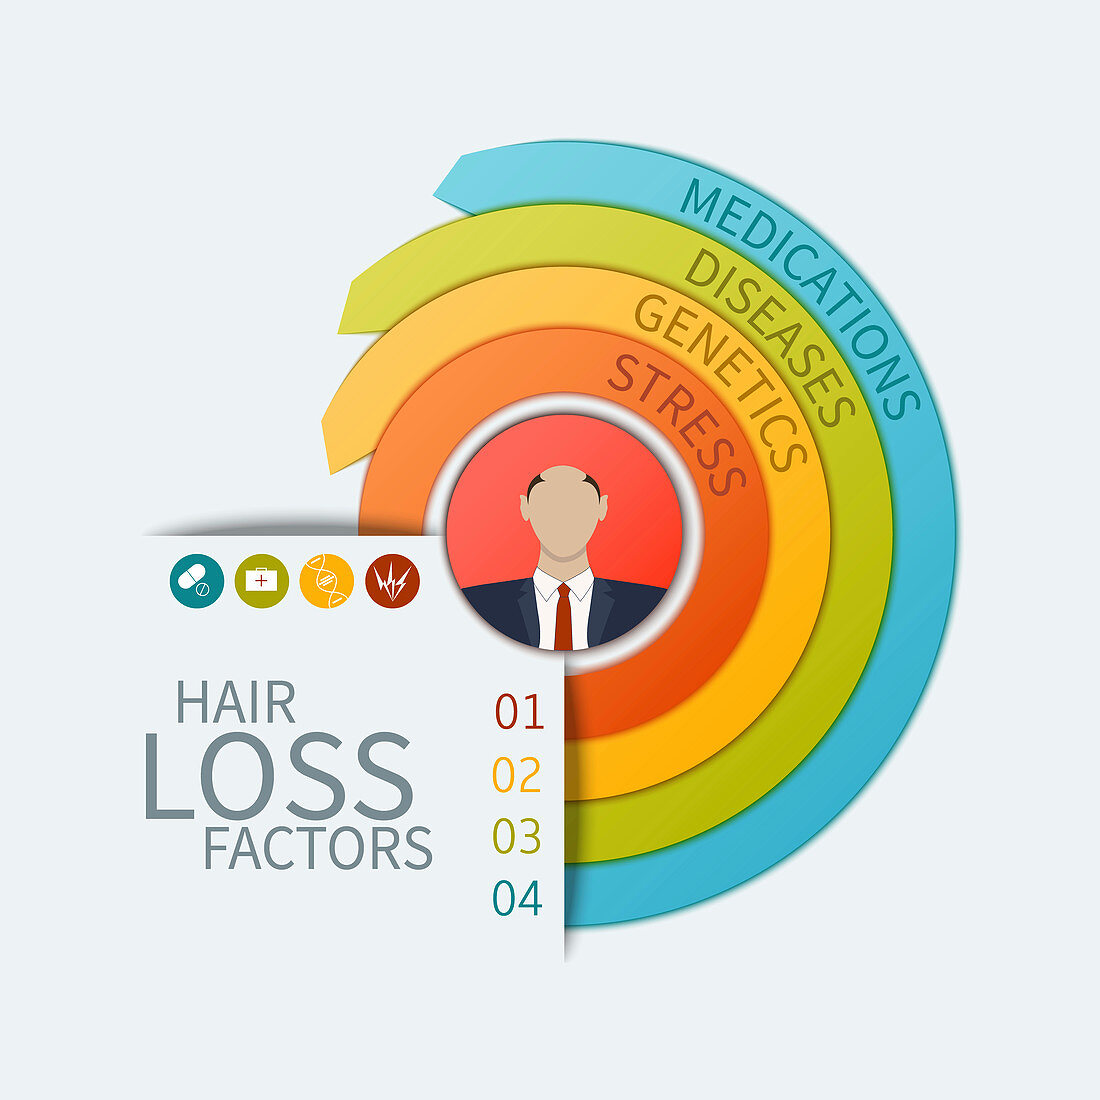 Hair loss factors, conceptual illustration